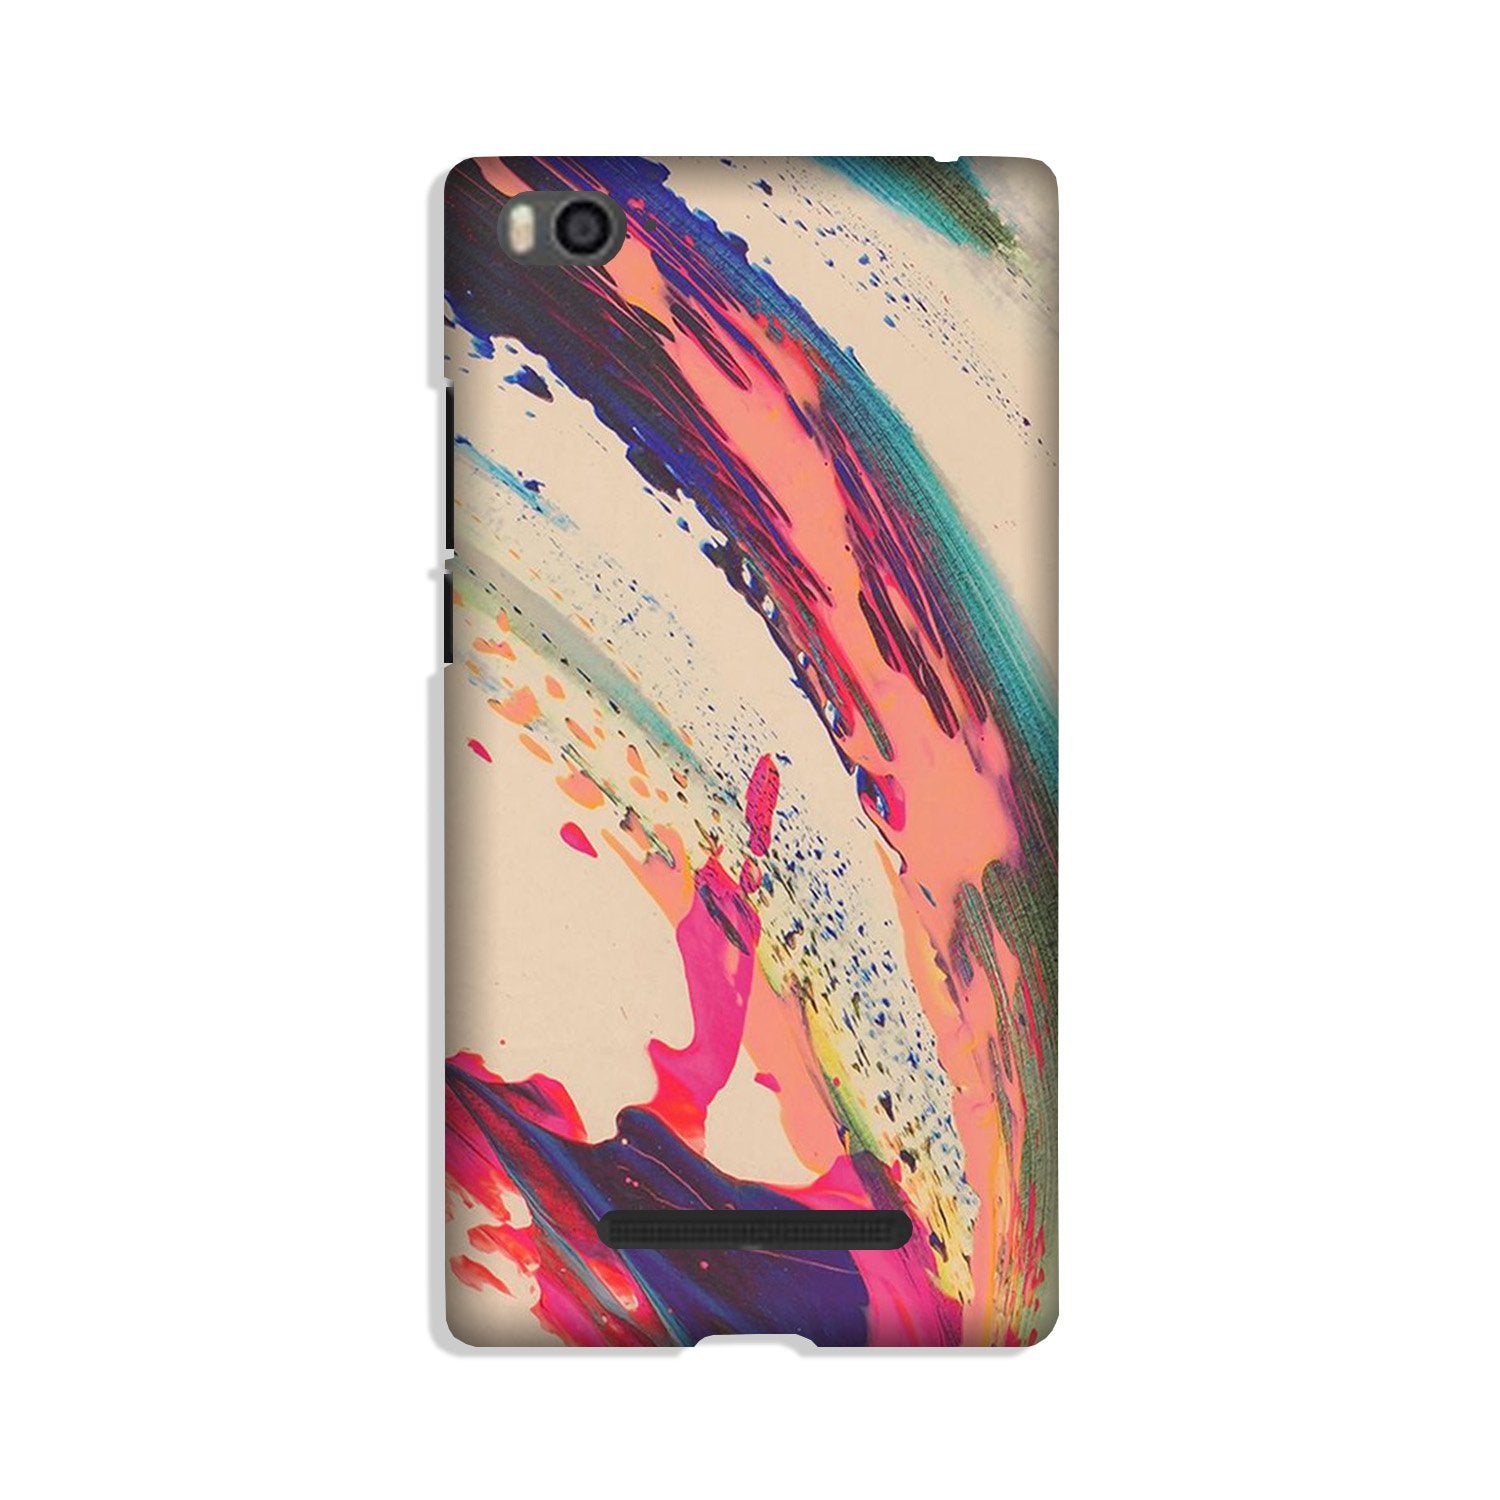 Modern Art Case for Xiaomi Mi 4i (Design No. 234)